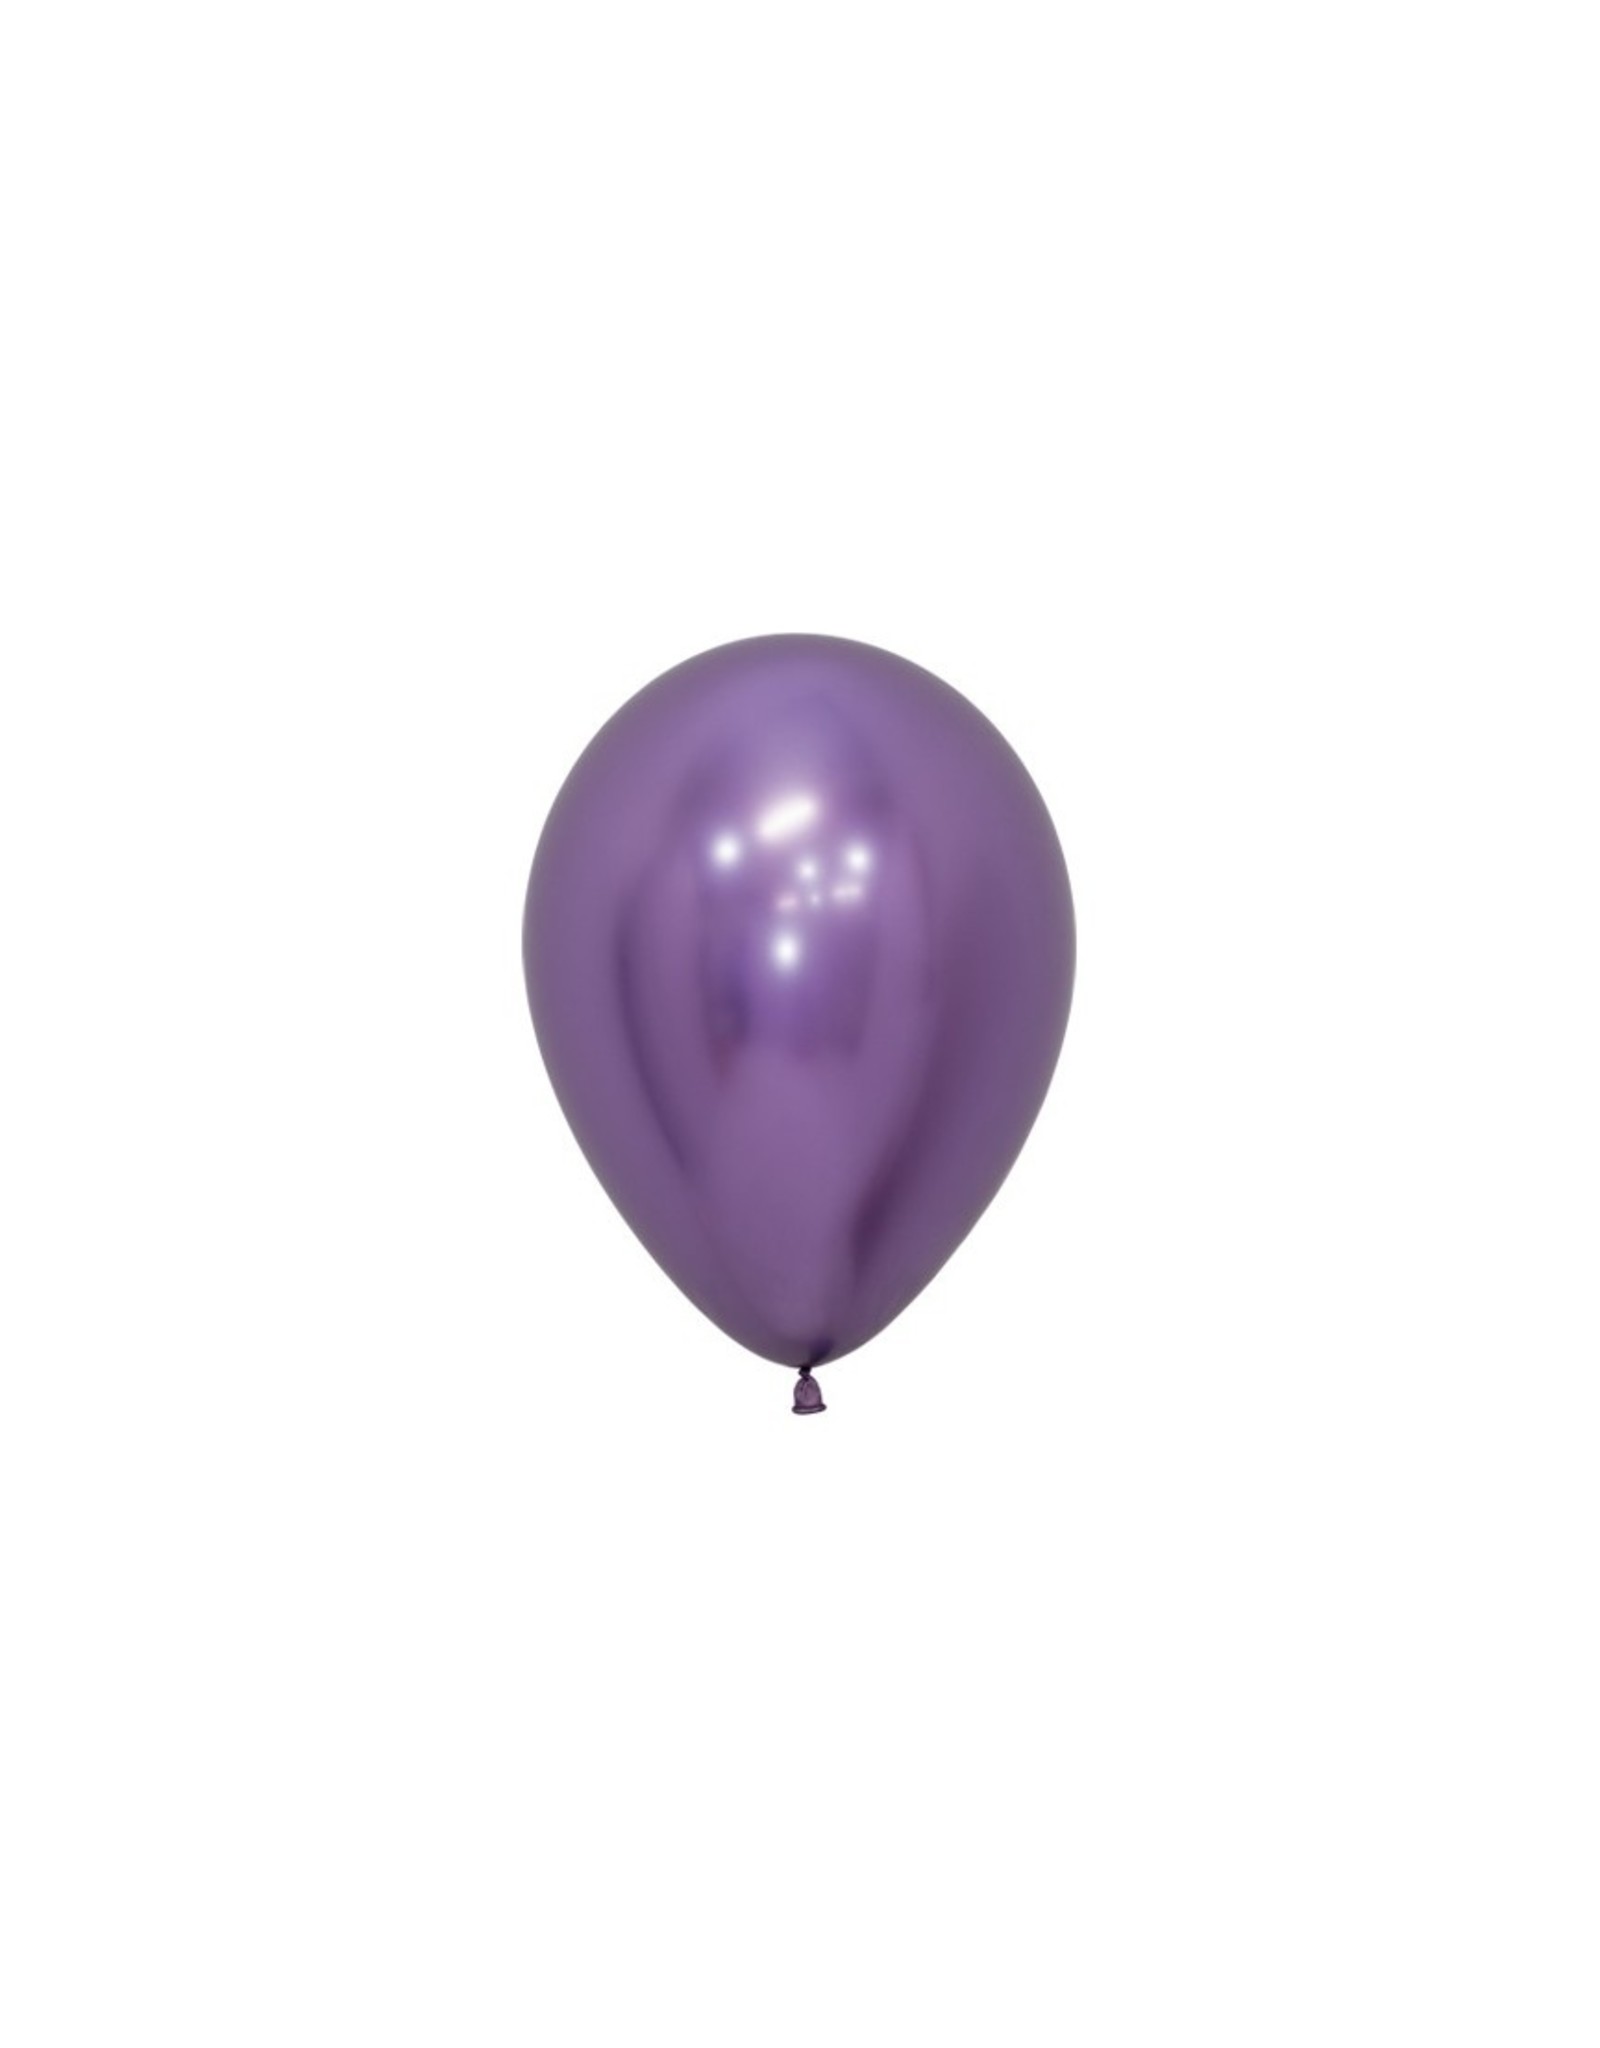 10x latex ballon reflex violet | 30 cm